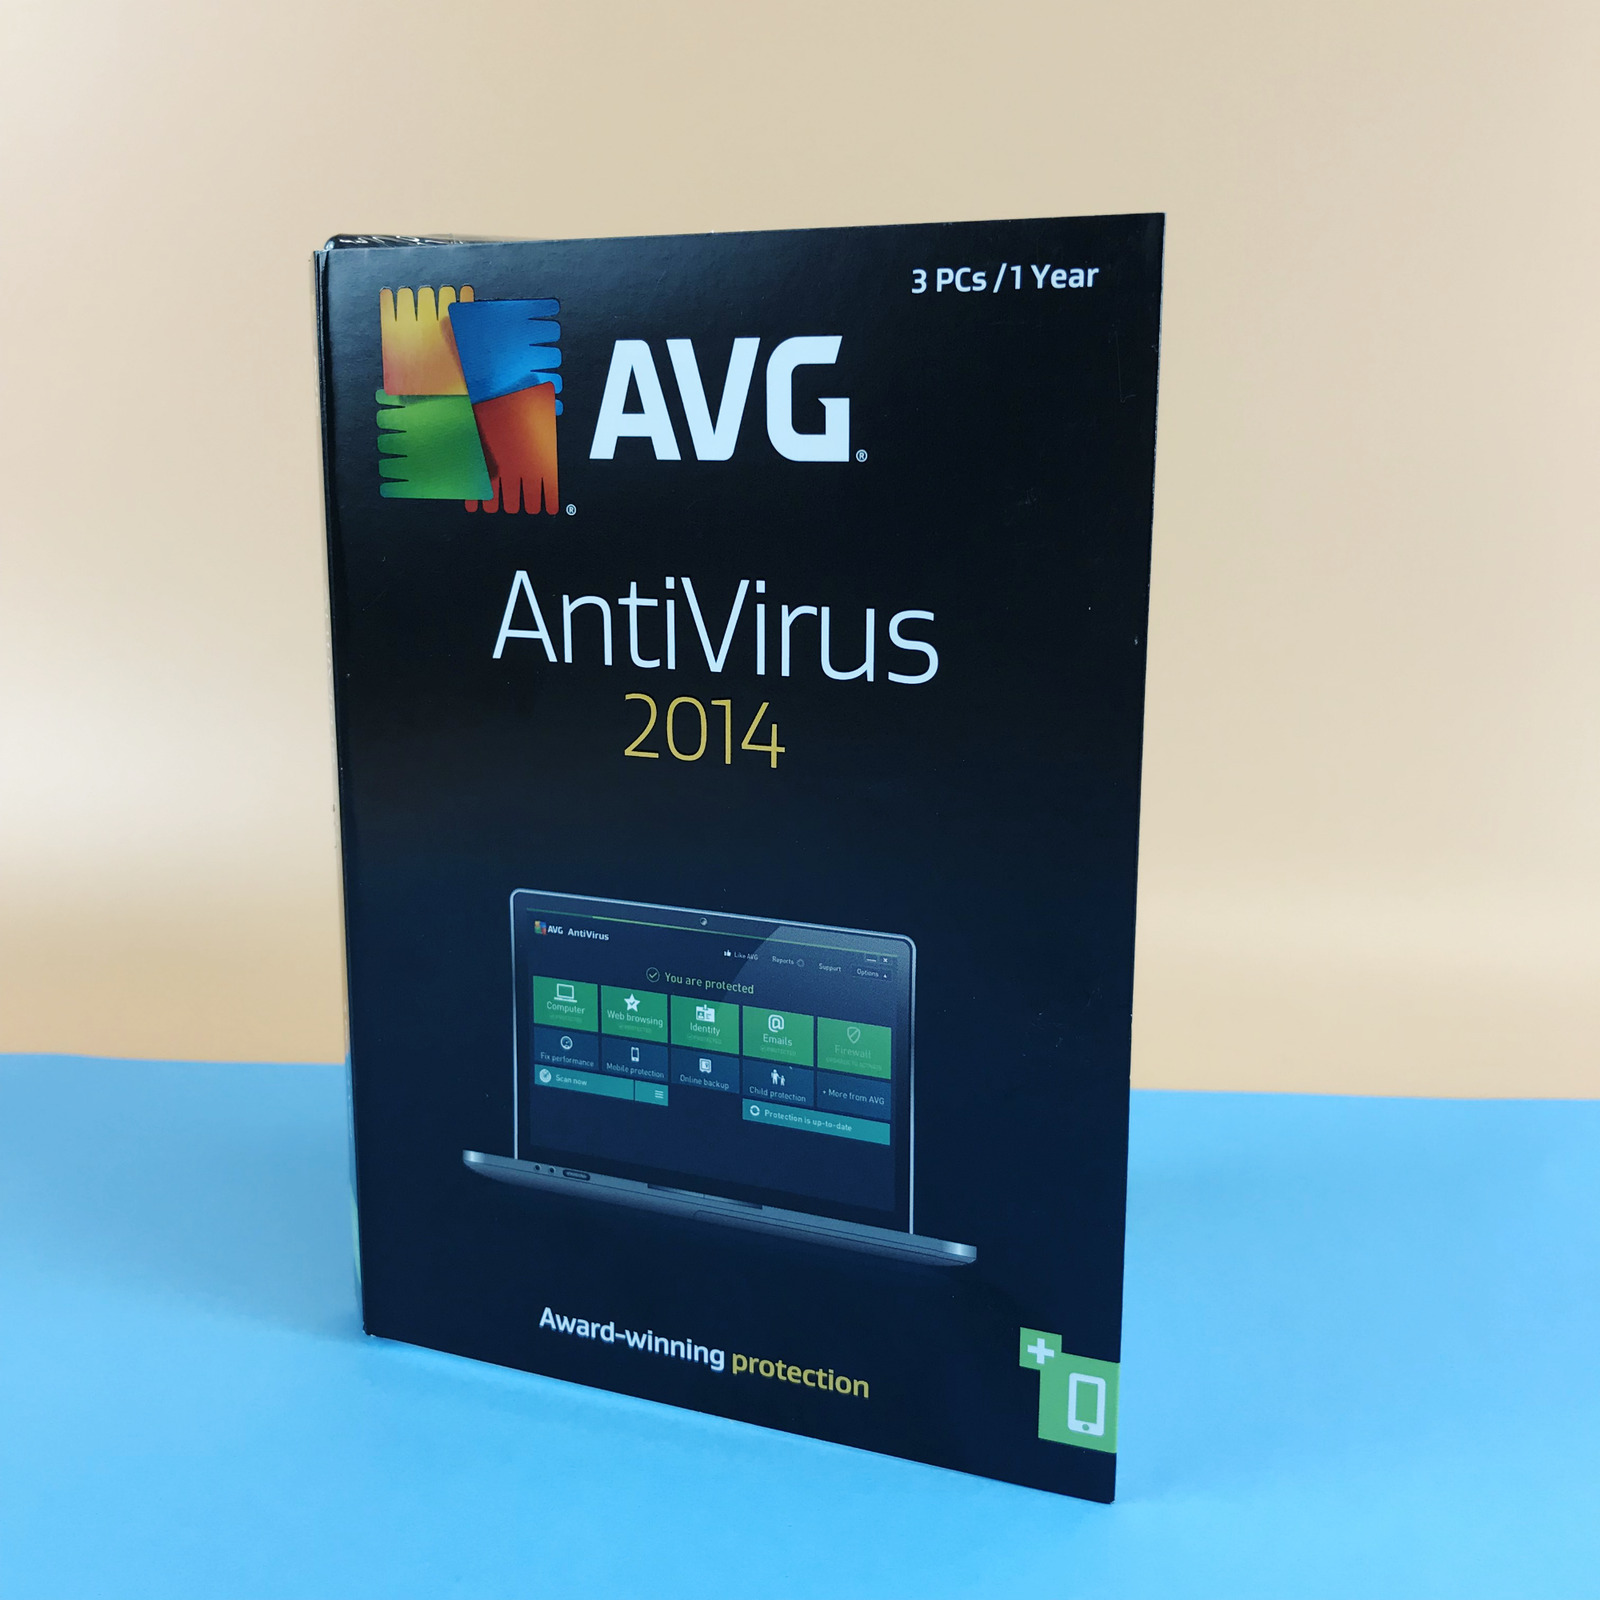 AVG AntiVirus 2014, 3 PCs /1 Year Award-winning protection w/Online shield #3607